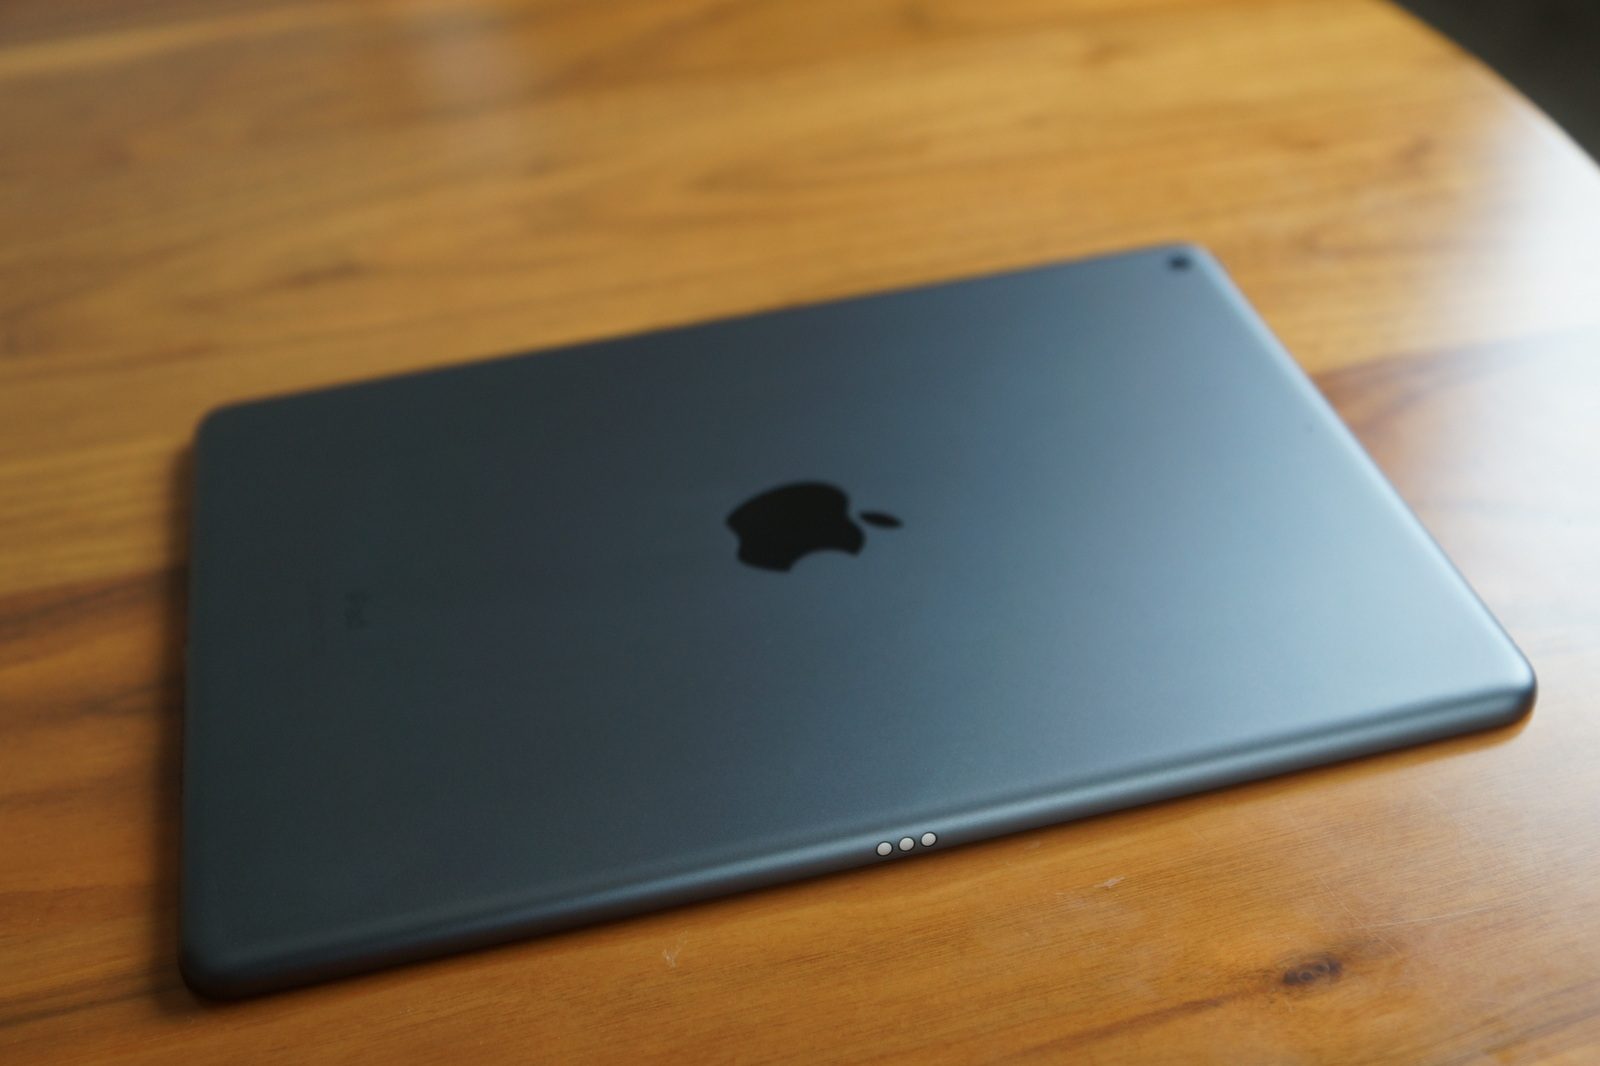 Apple iPad 10.2 inch 8th Gen 32GB Wi-Fi (As New)